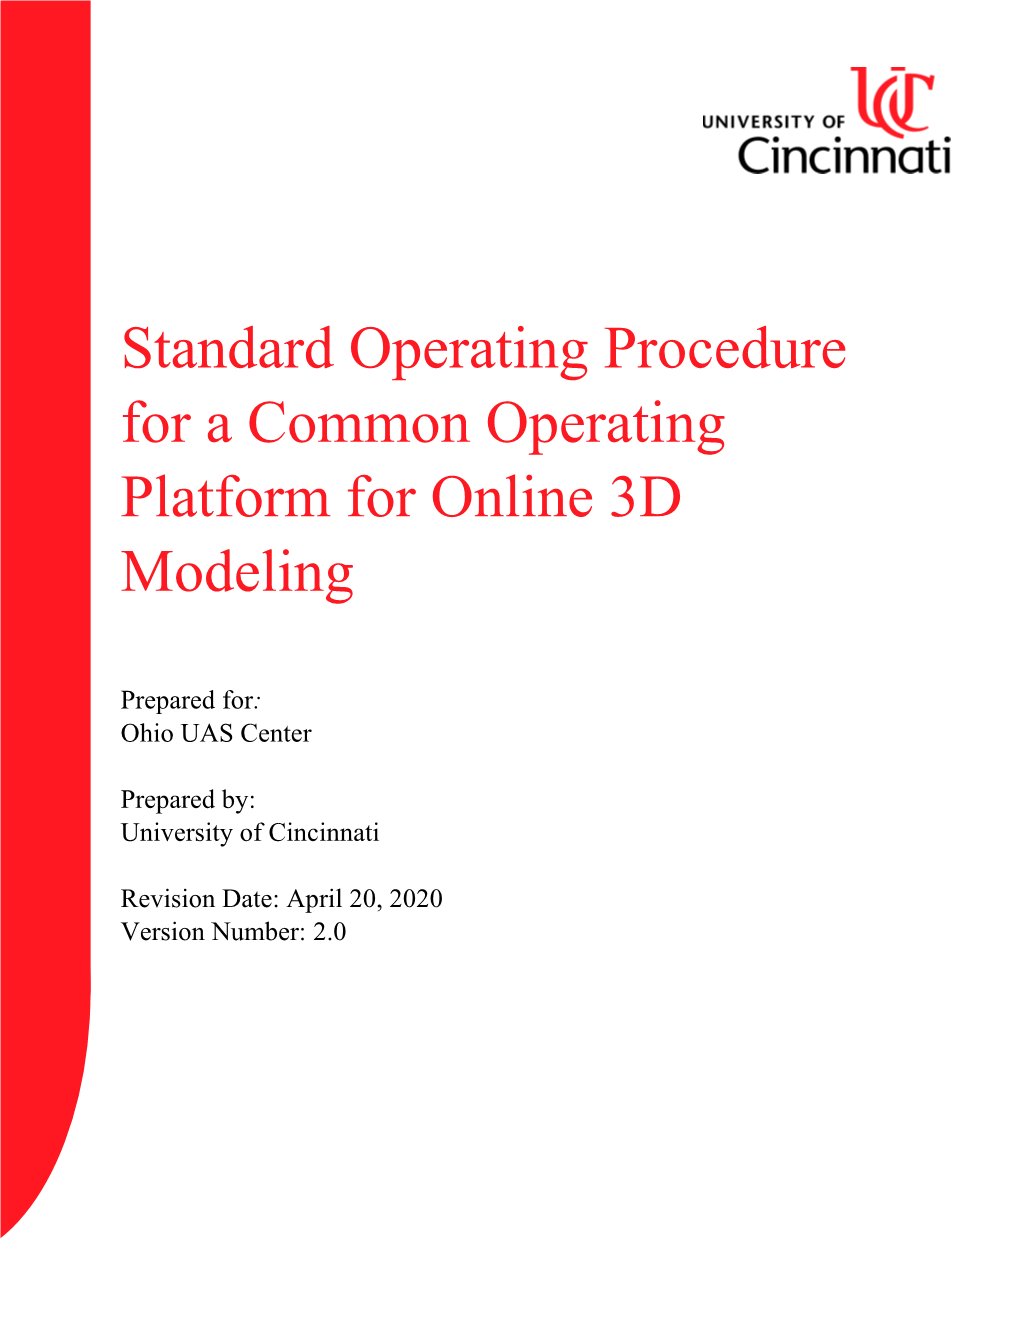 Standard Operating Procedure for a Common Operating Platform for Online 3D Modeling